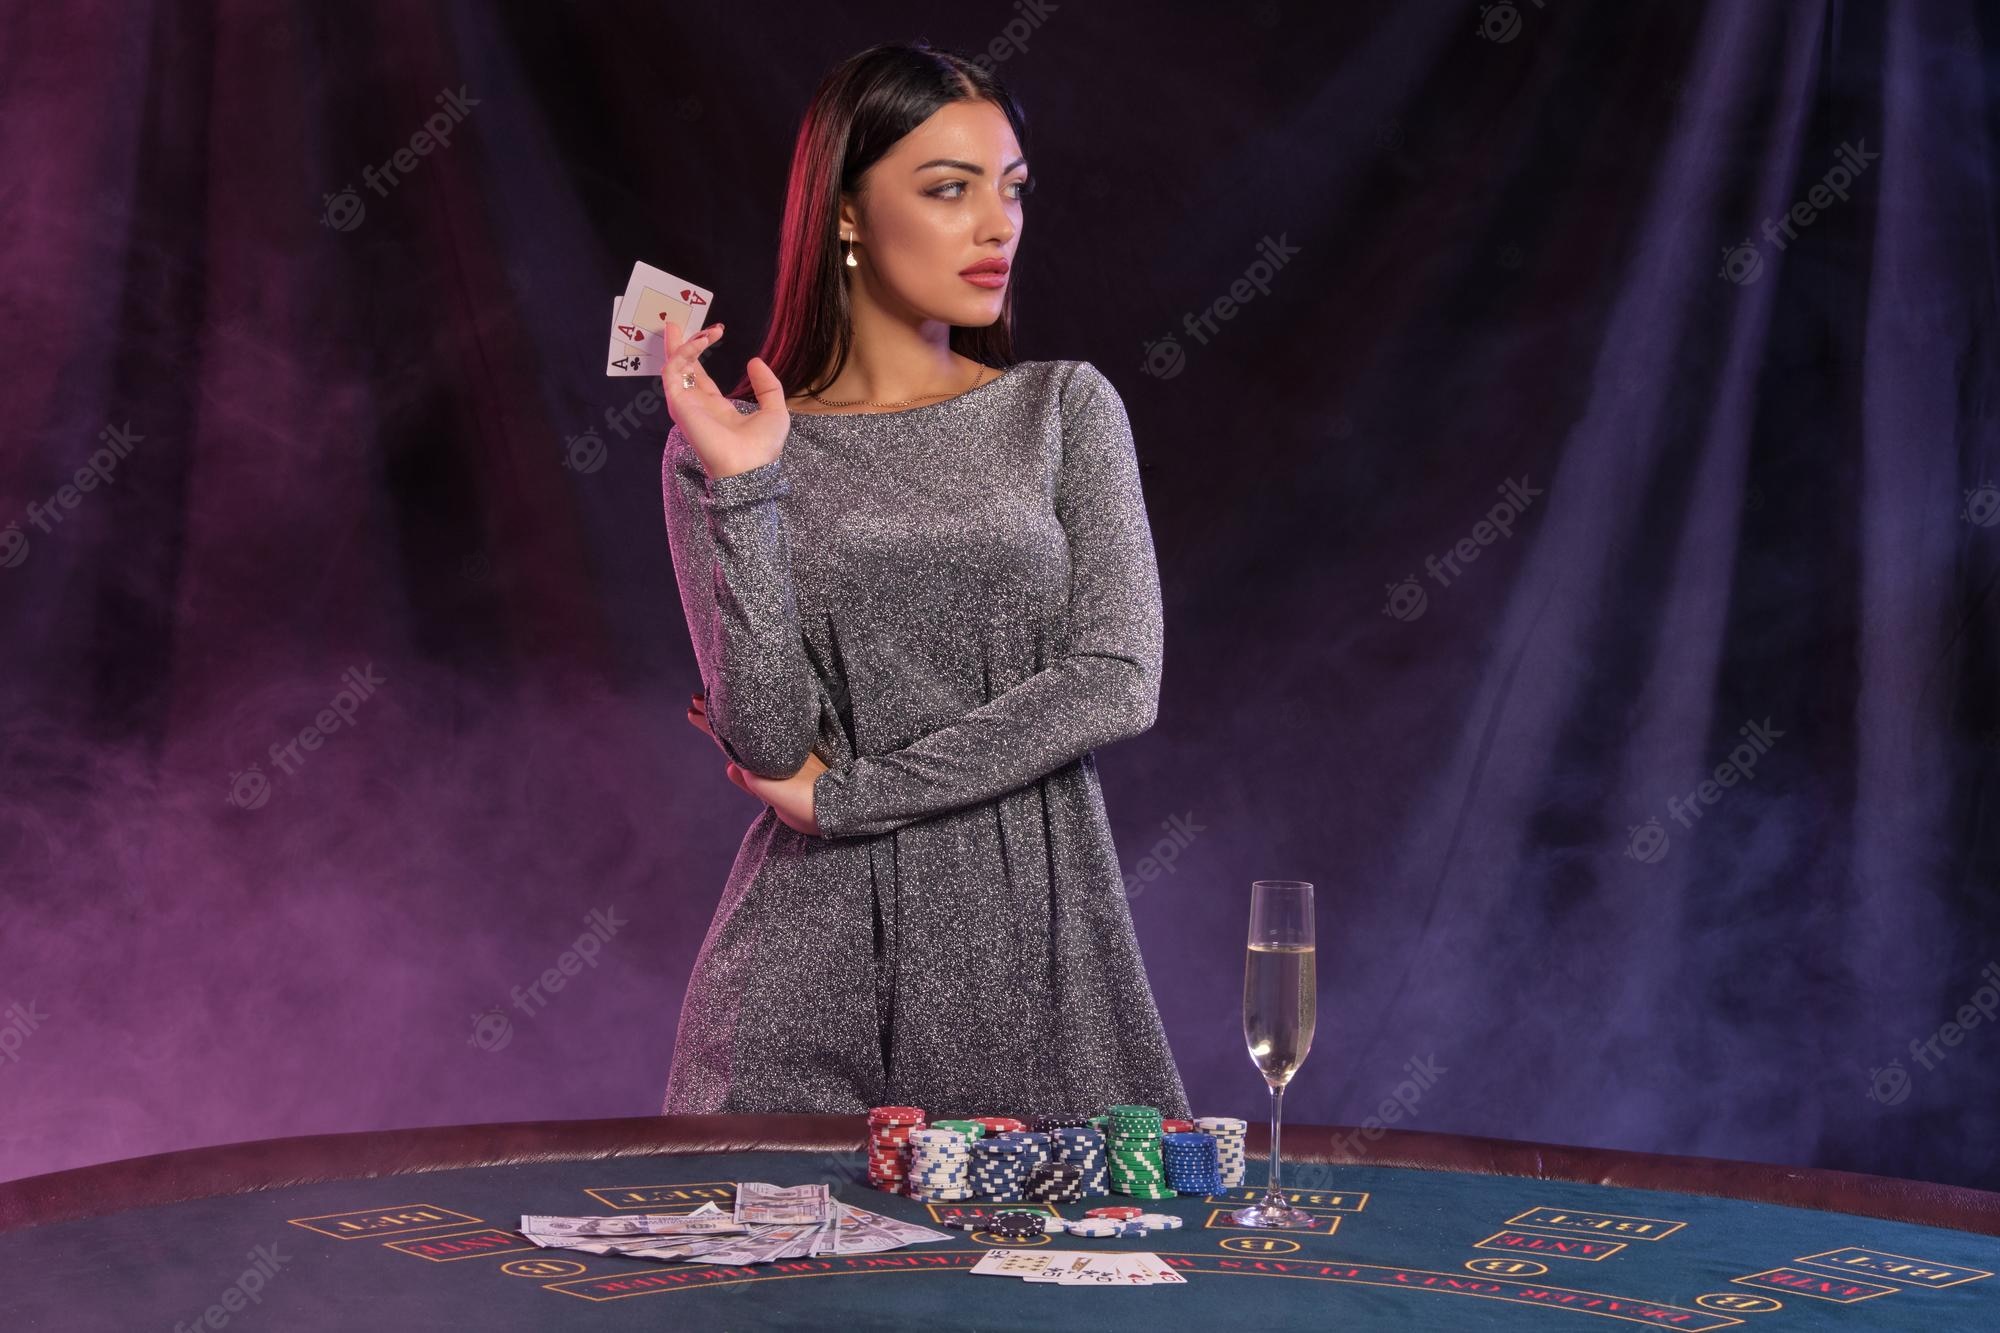 Casino Girl Wallpapers